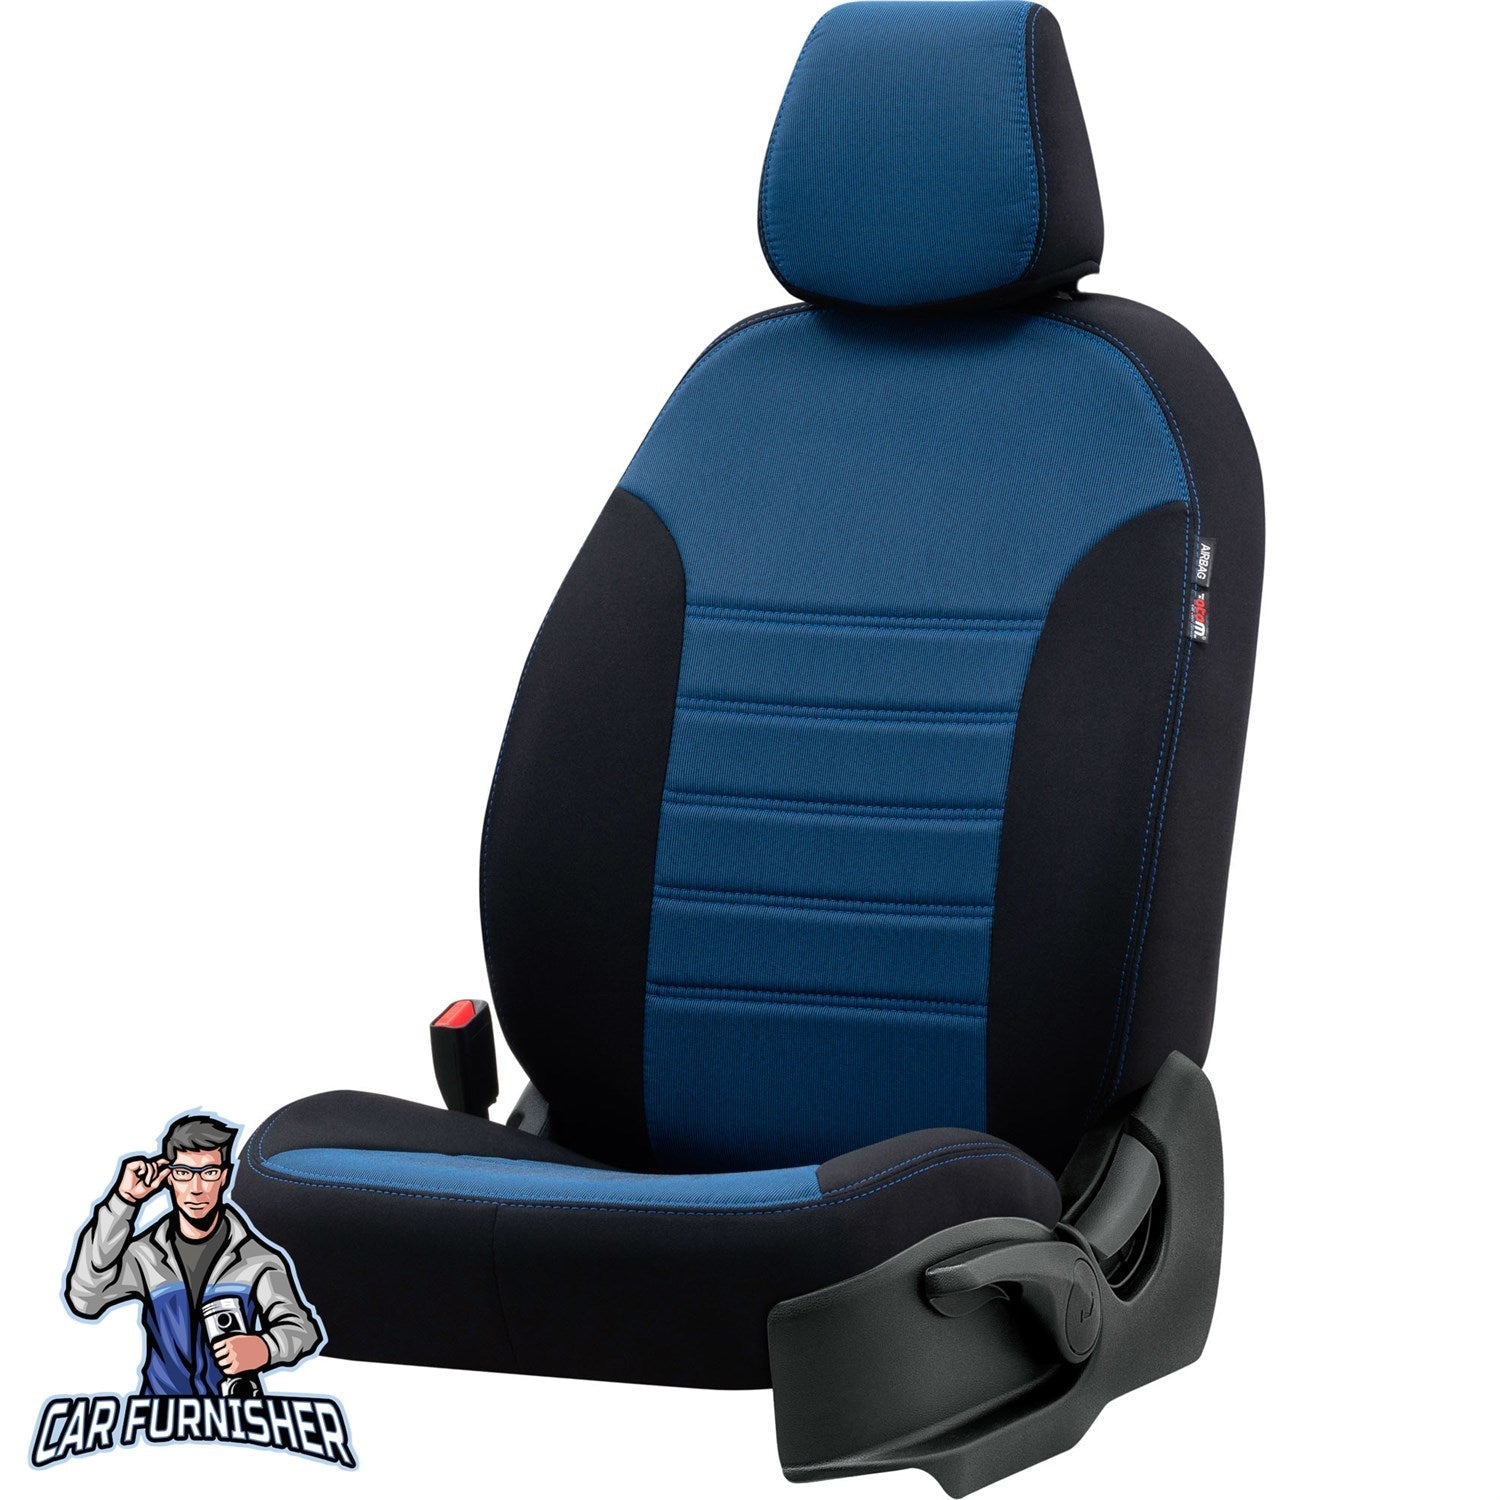 Fiat Stilo Seat Covers Original Jacquard Design Blue Jacquard Fabric